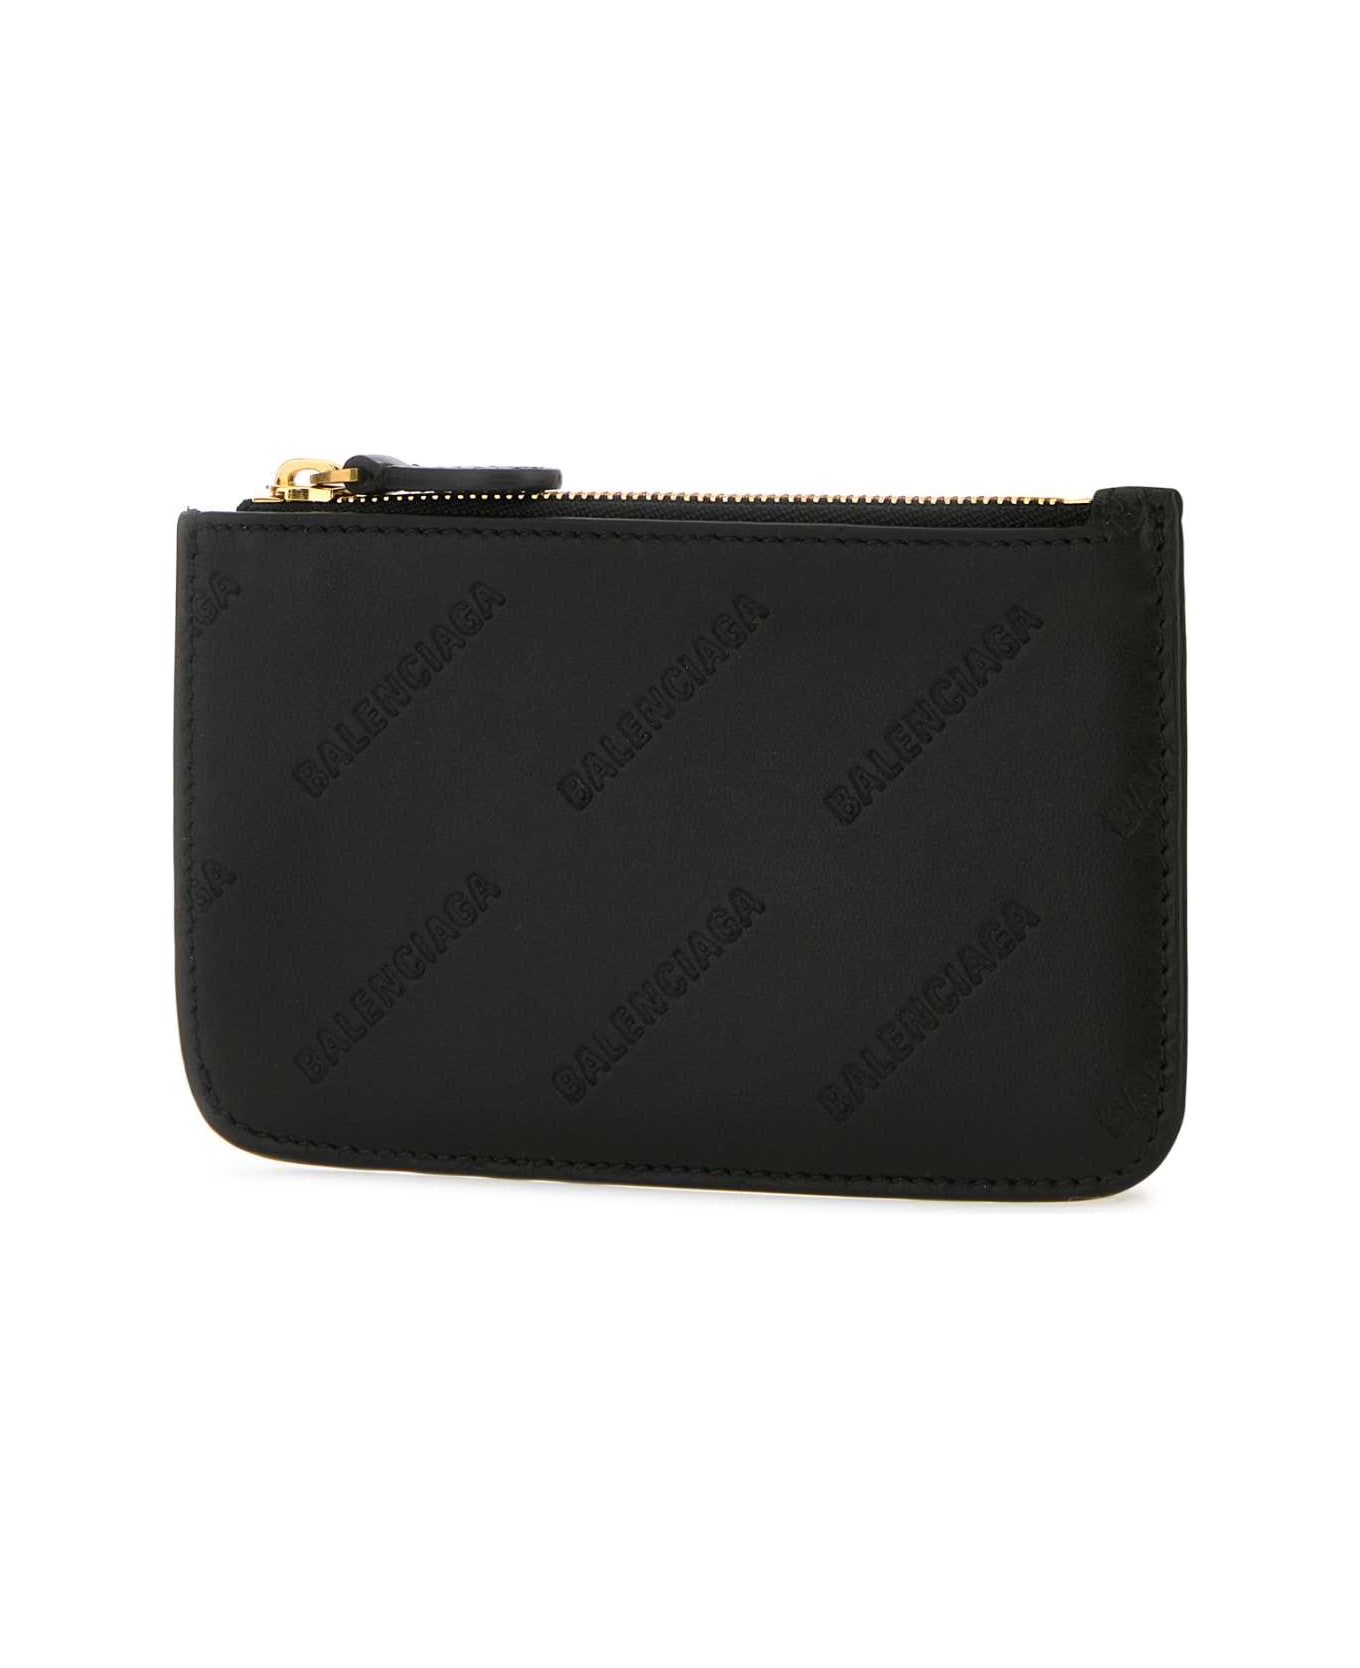 Balenciaga Black Leather Card Holder - Black 財布